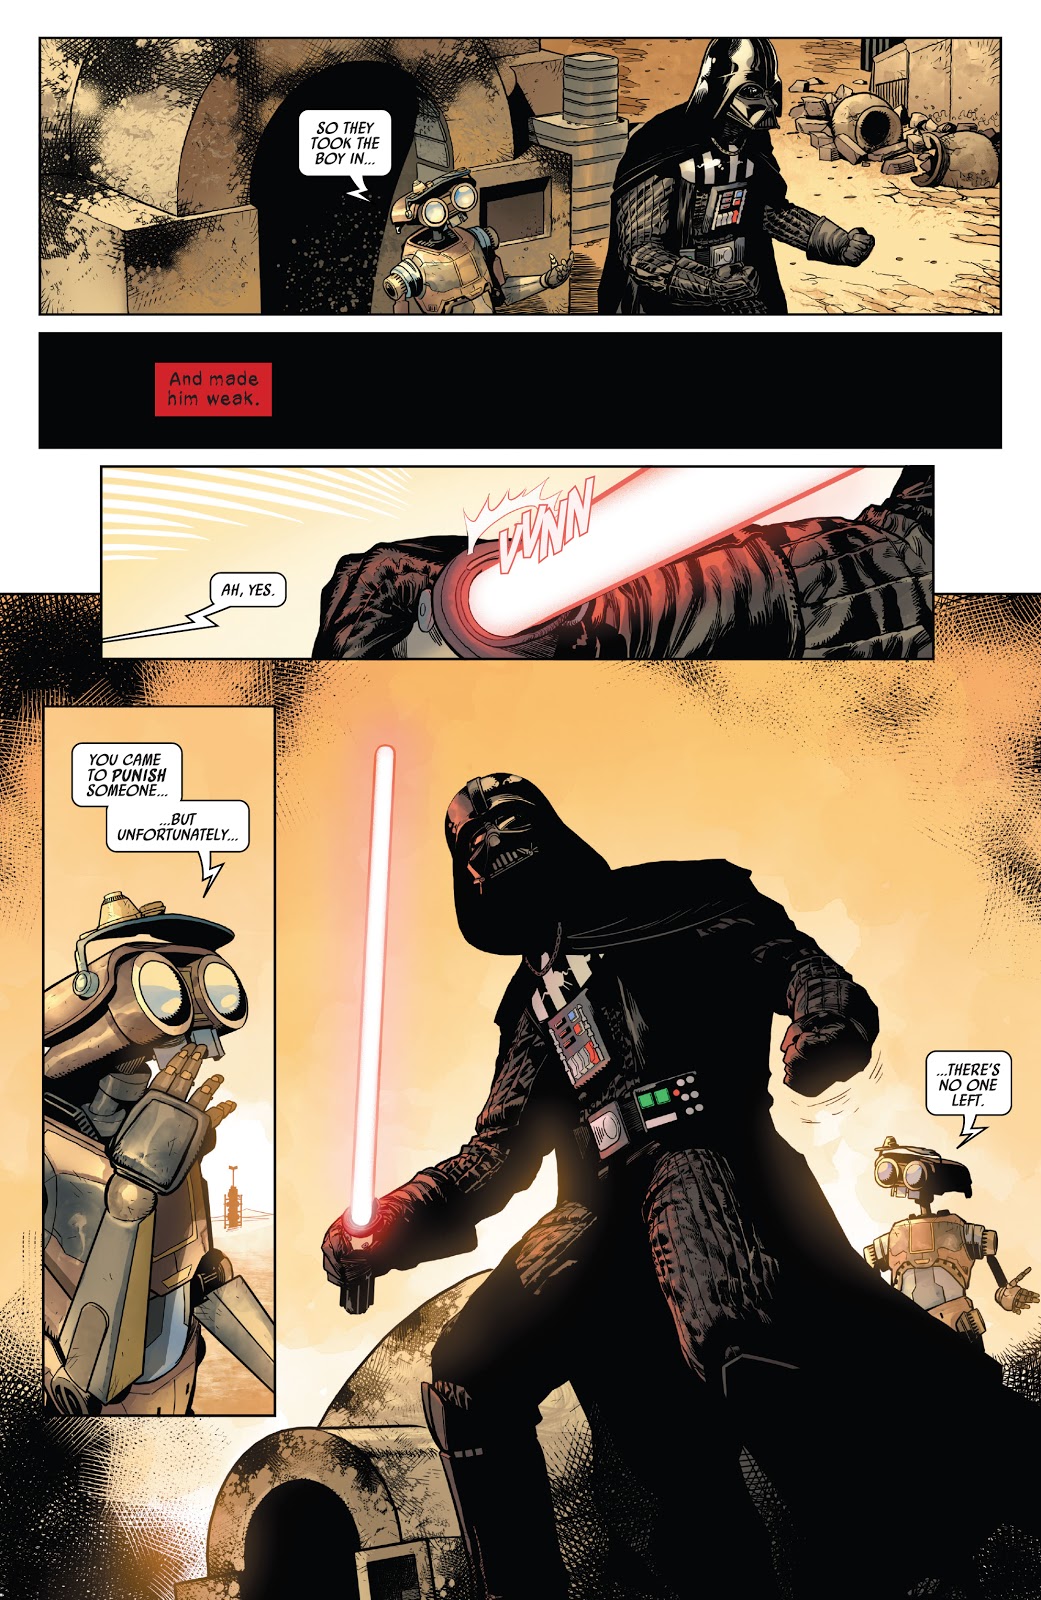 Darth Vader Returns To Tatooine